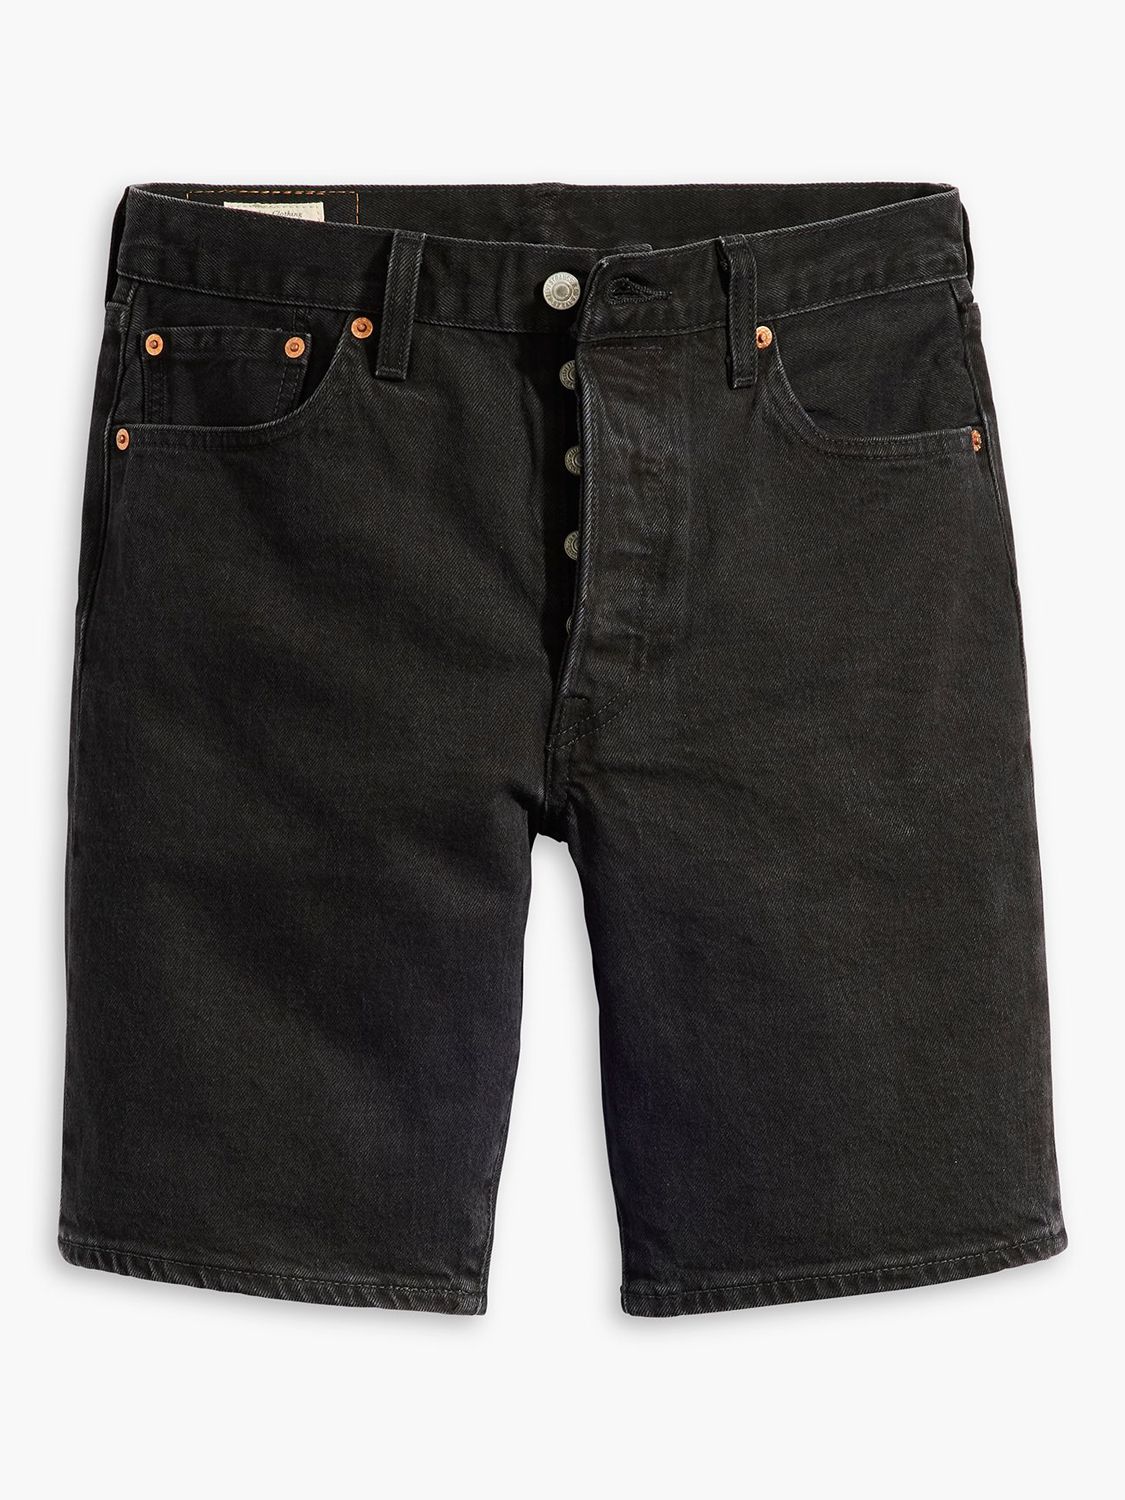 Levi's 501 Original Denim Shorts, Black Accord Short, 34R